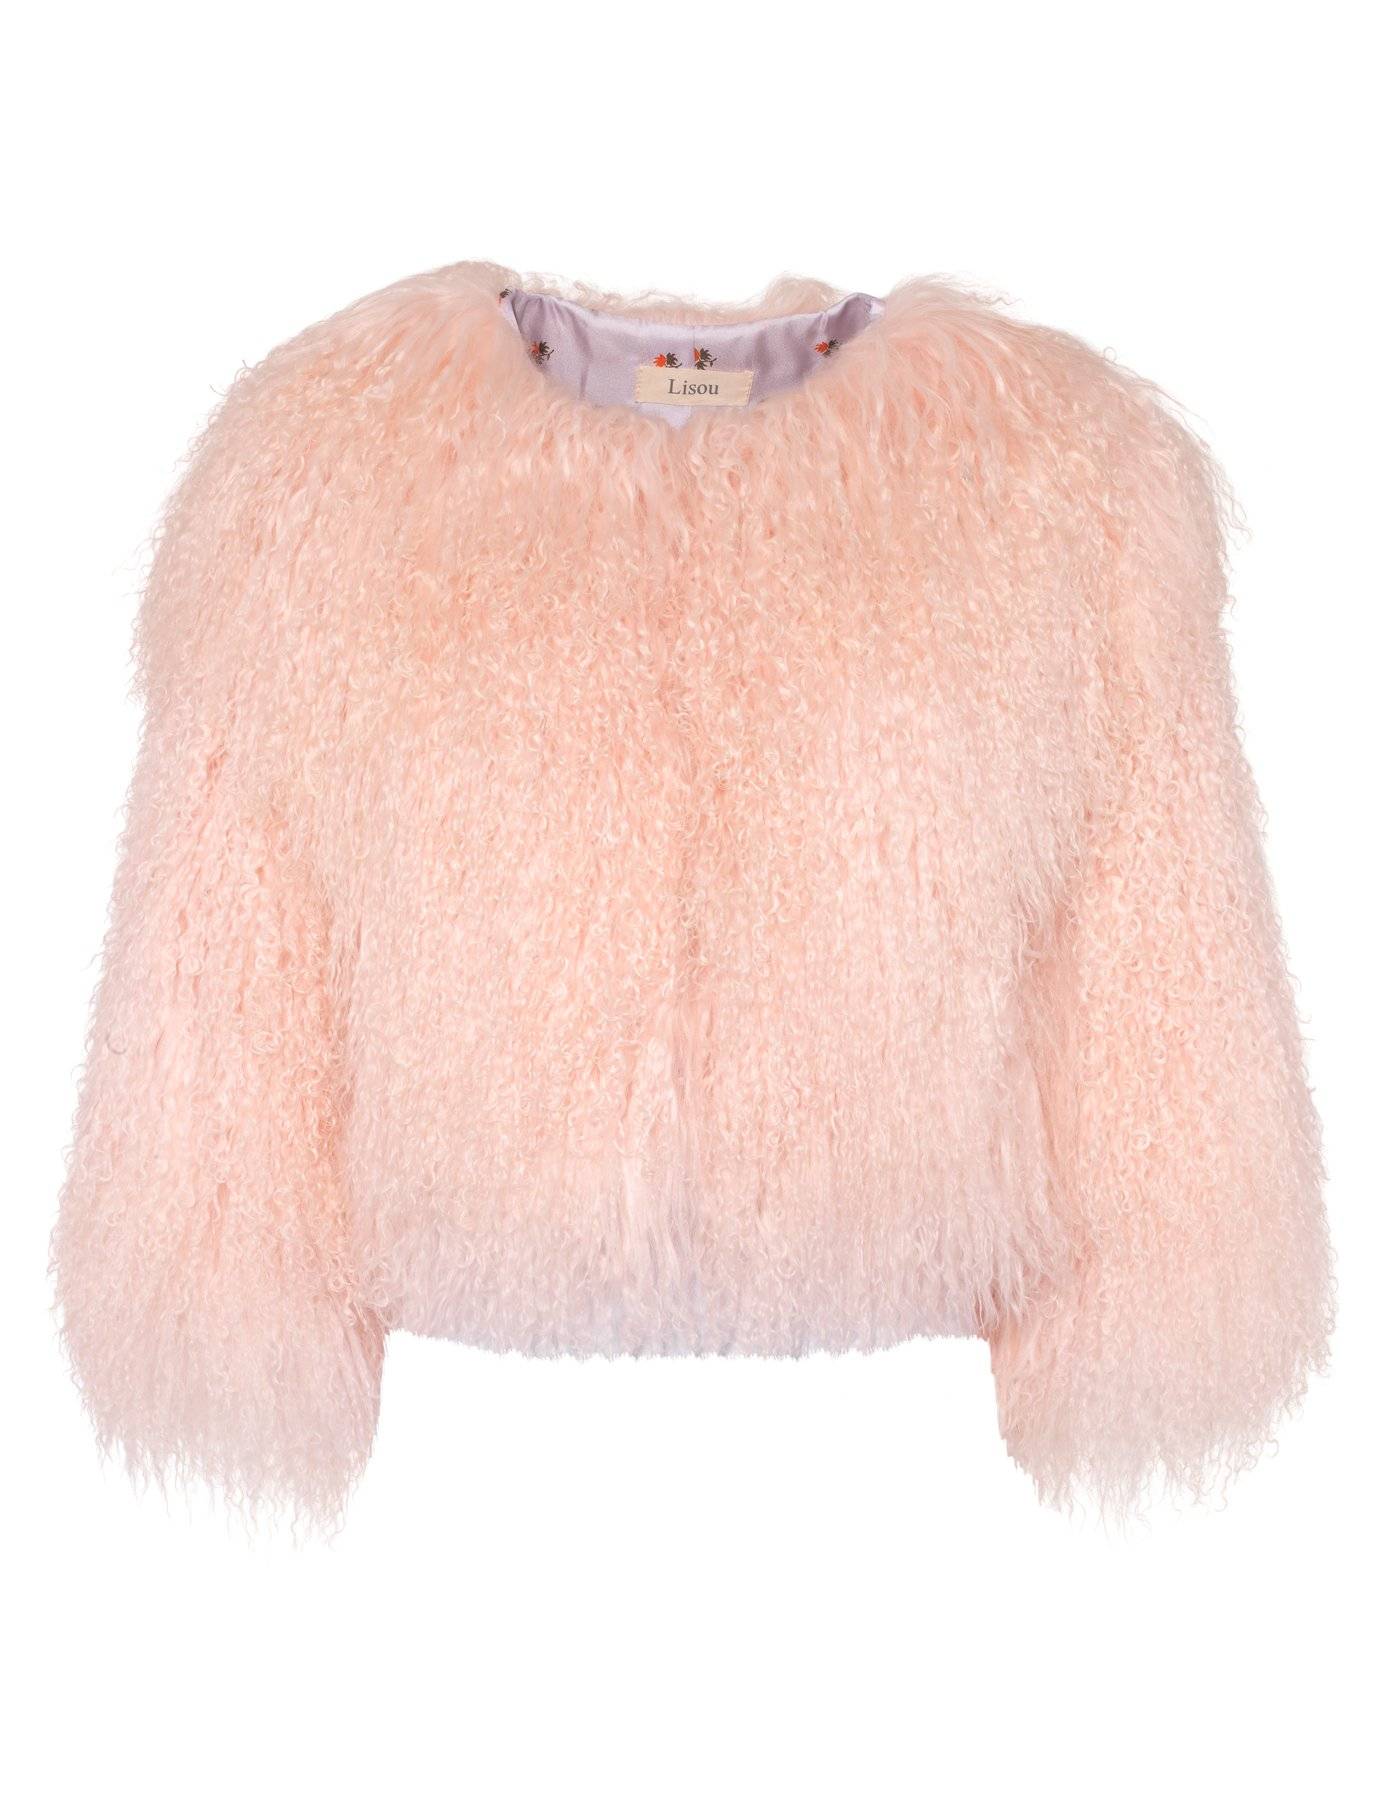 lisou colette cropped wool jacket